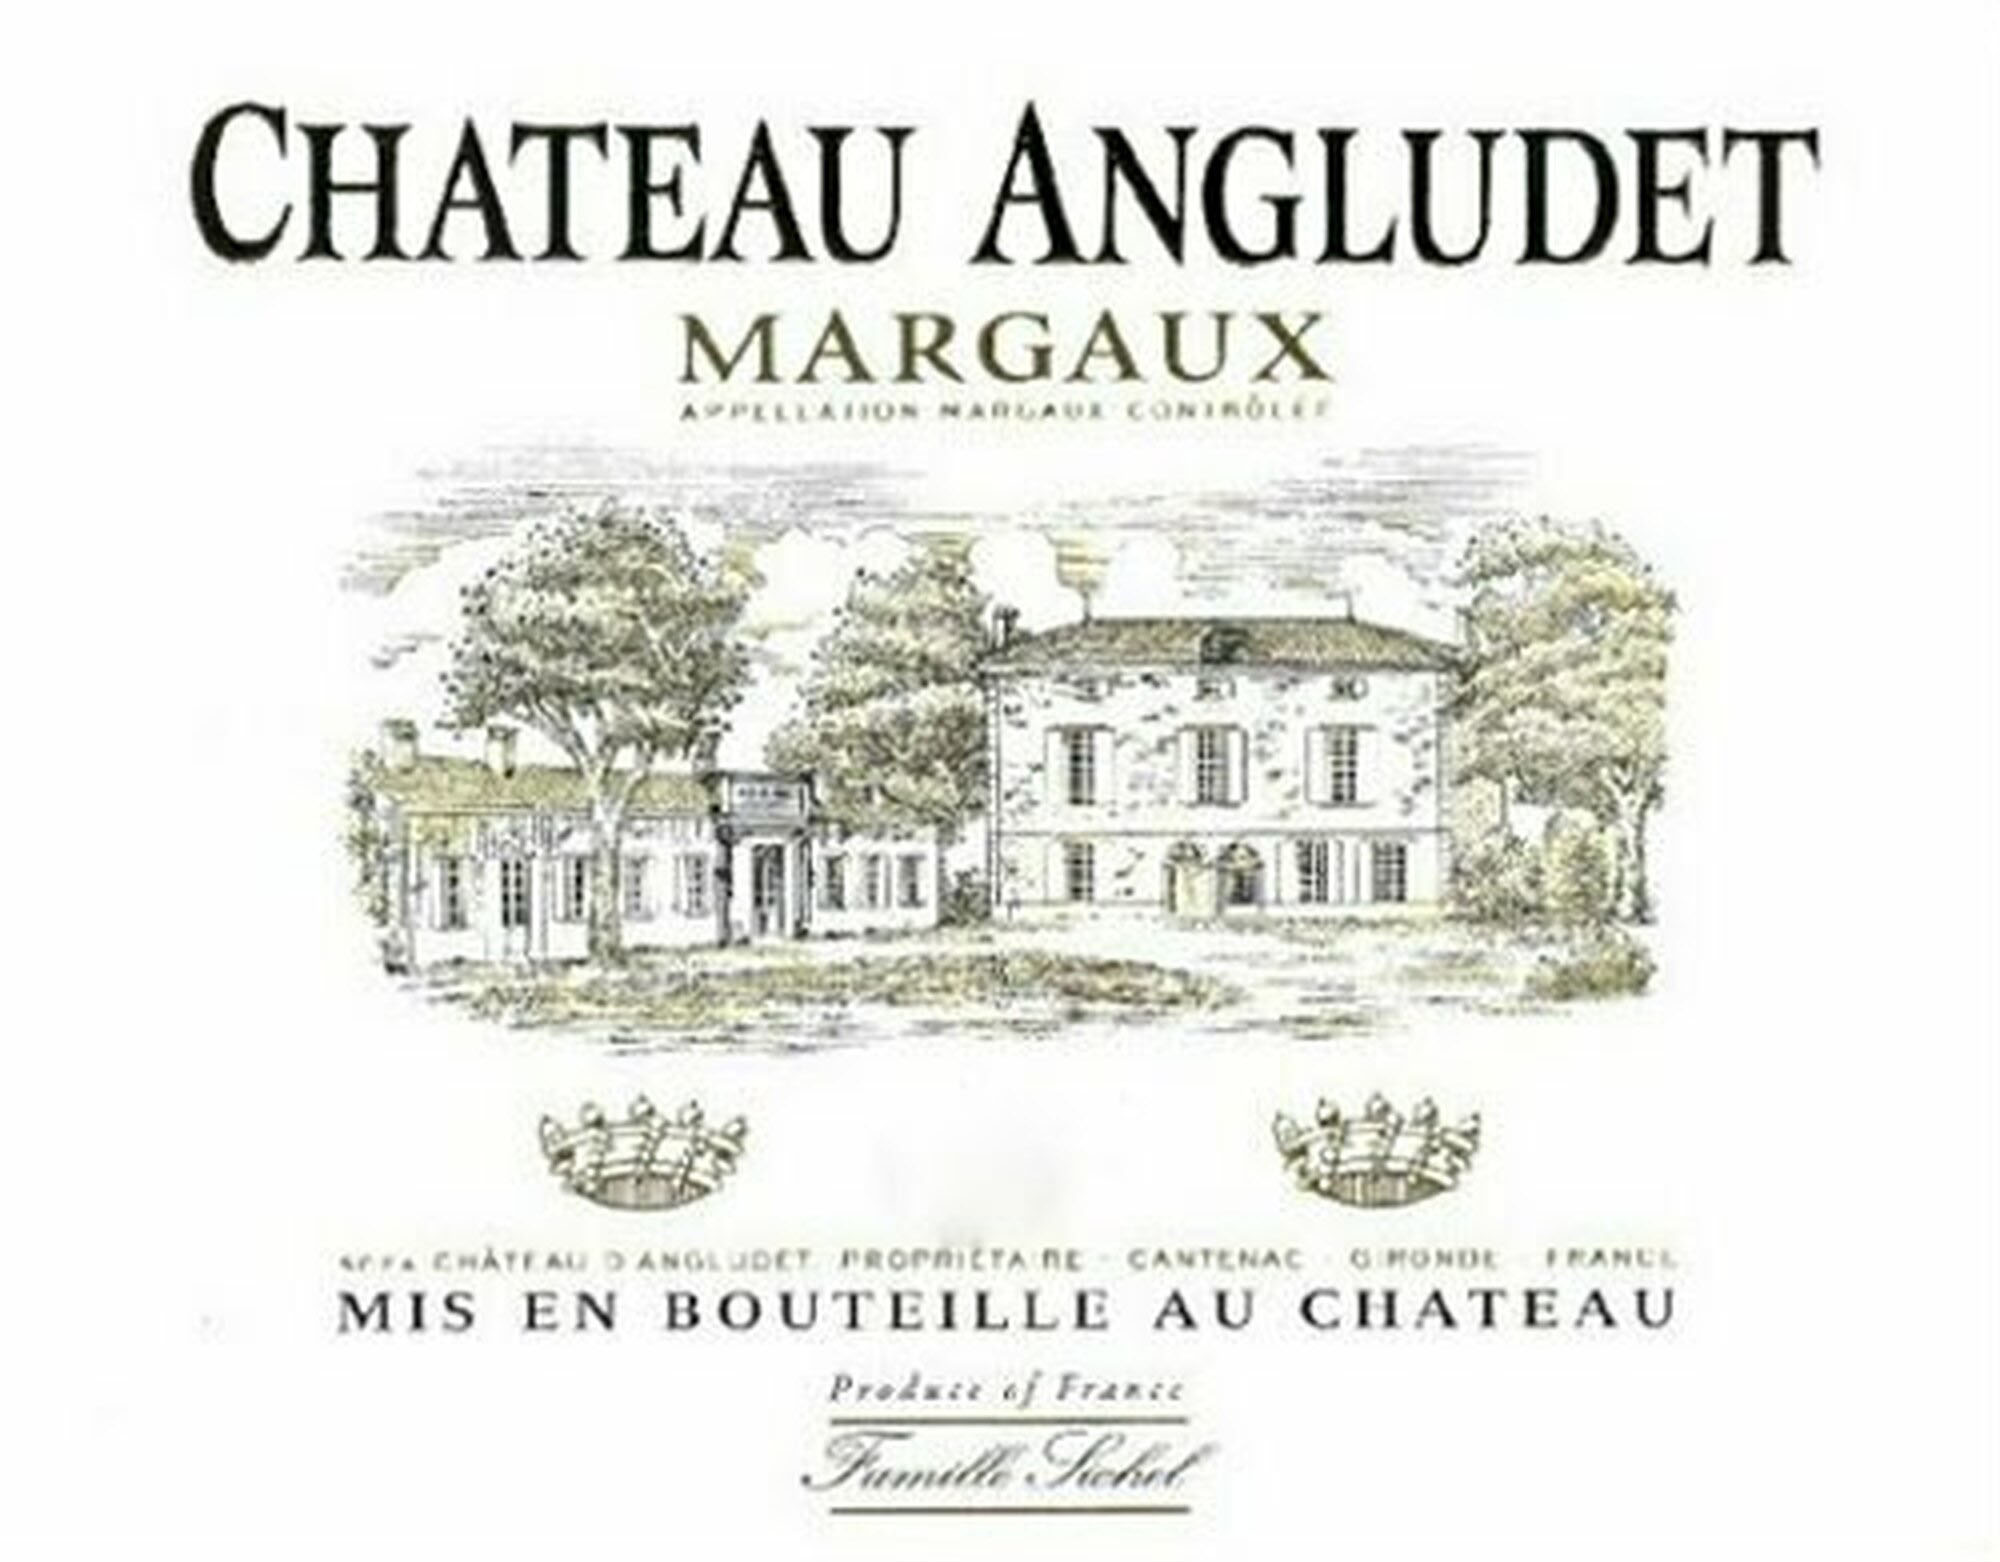 Angludet, Bordeaux, Margaux, France, AOC, Cru Bourgeois